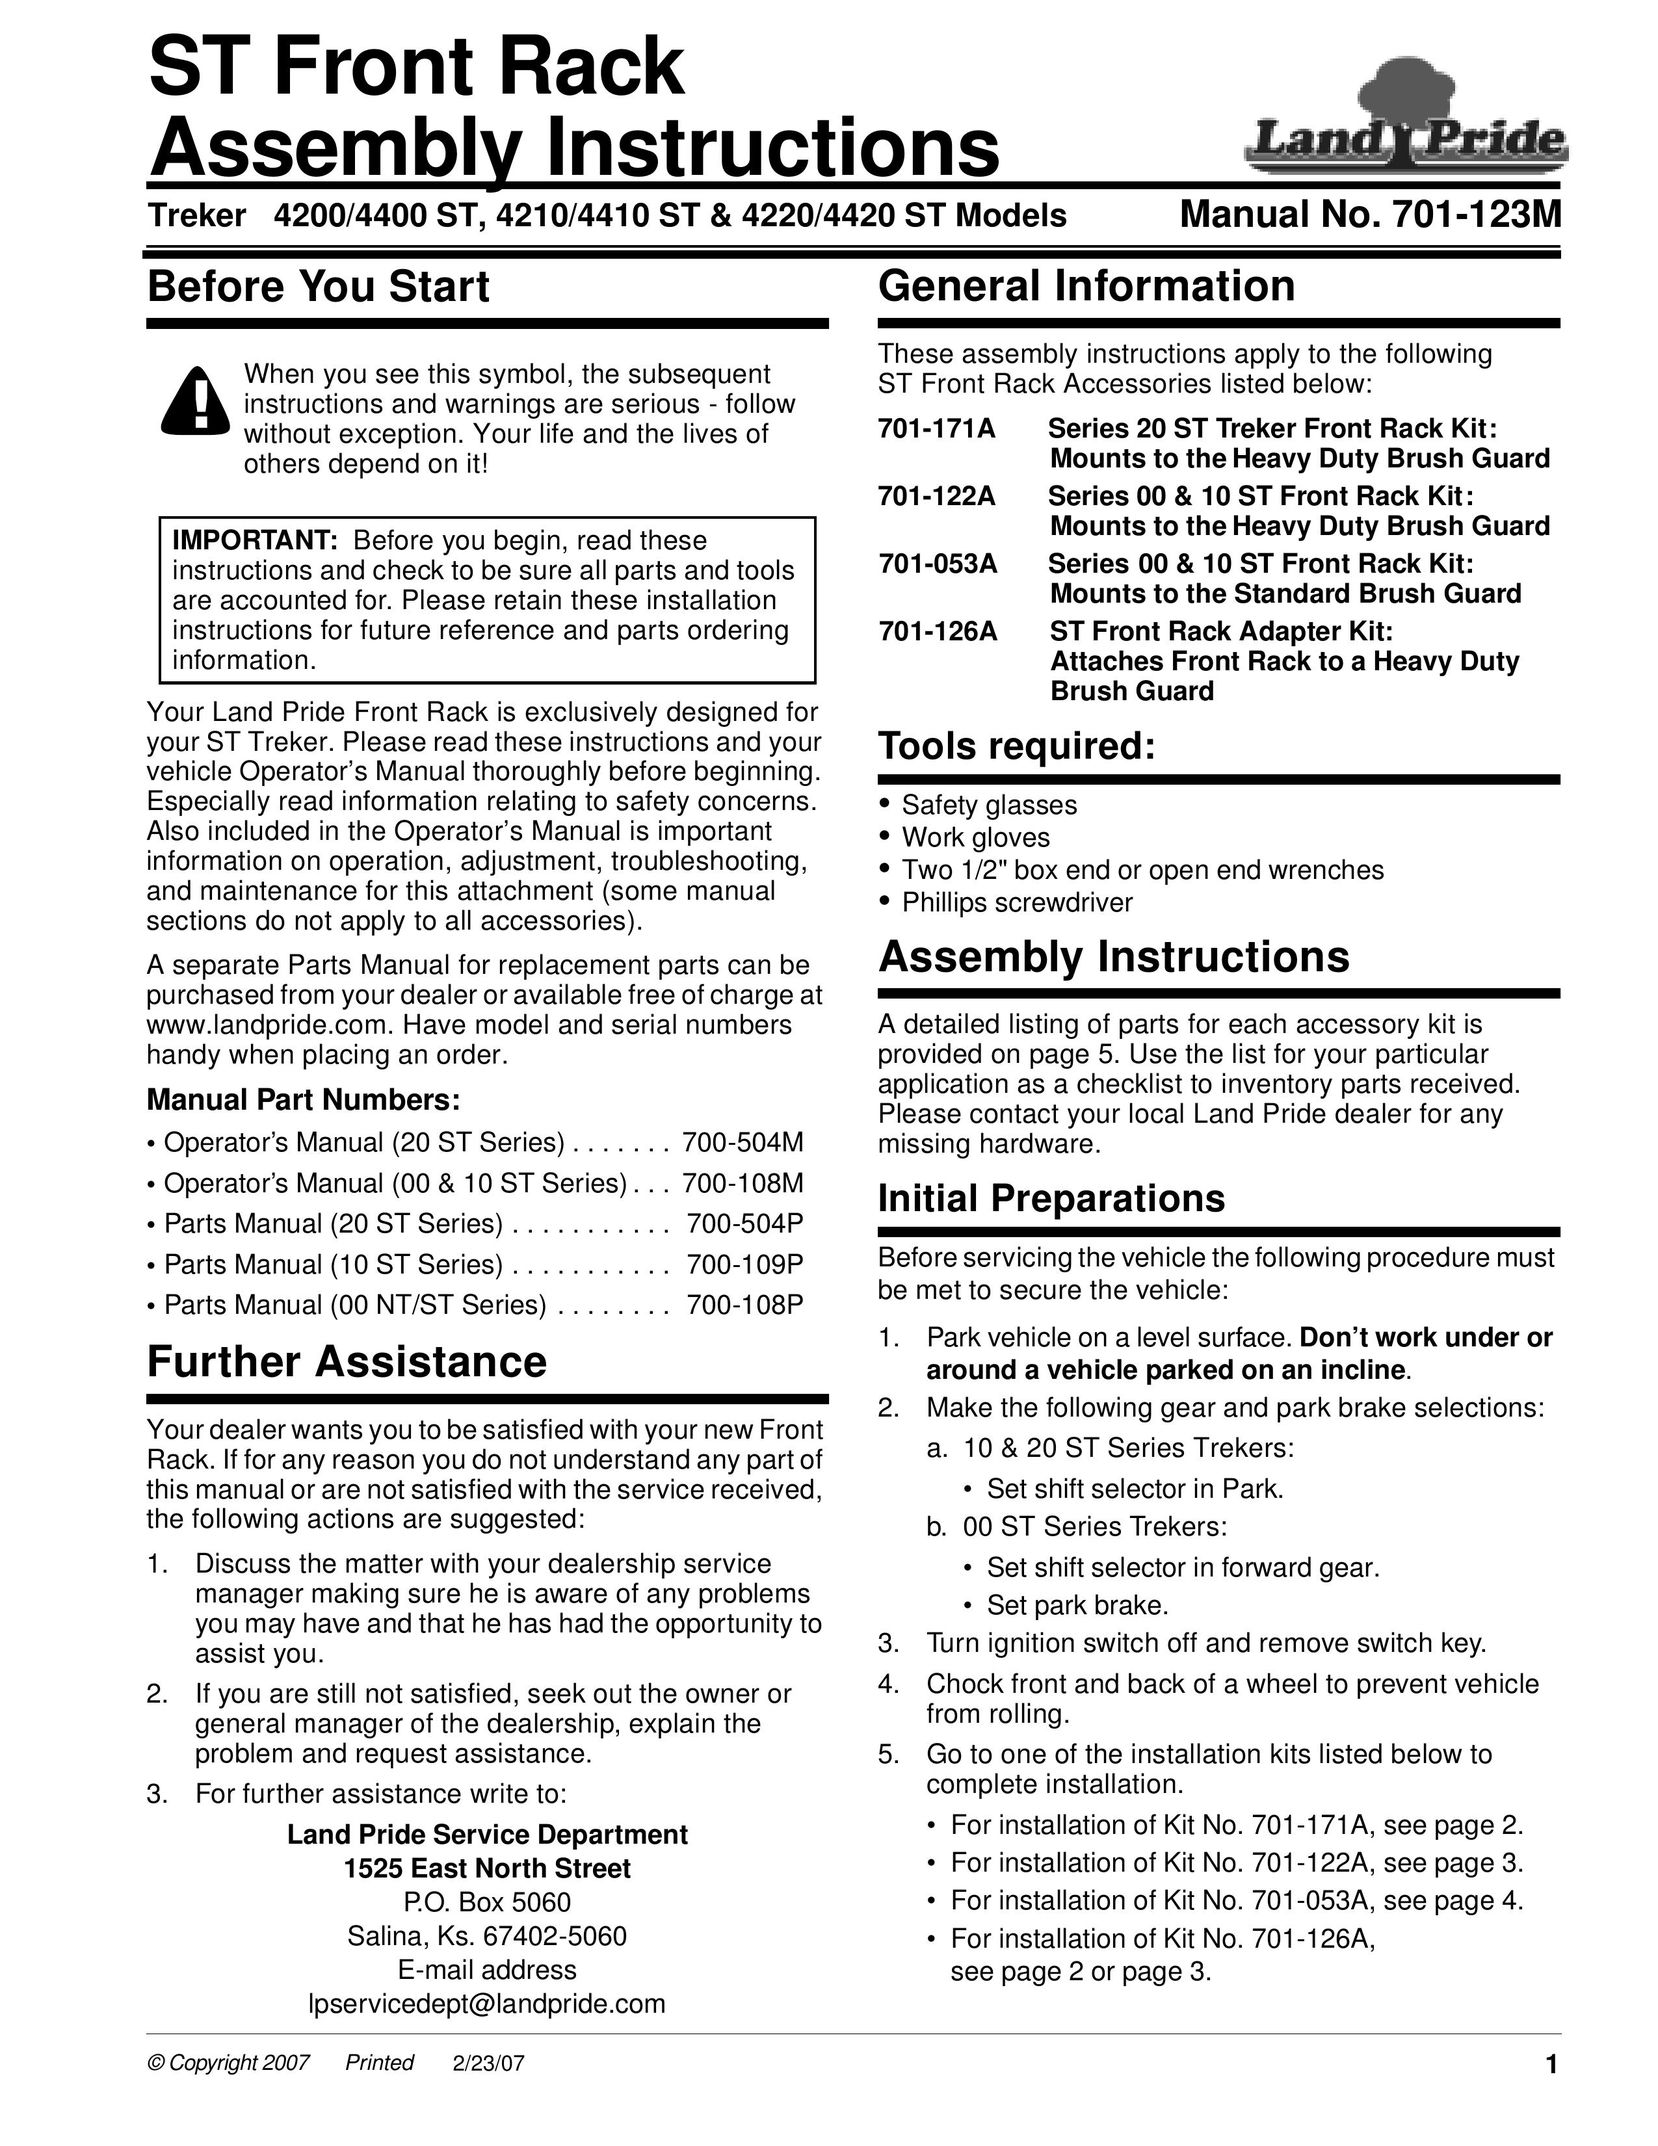 Land Pride 701-122a Child Tracker User Manual